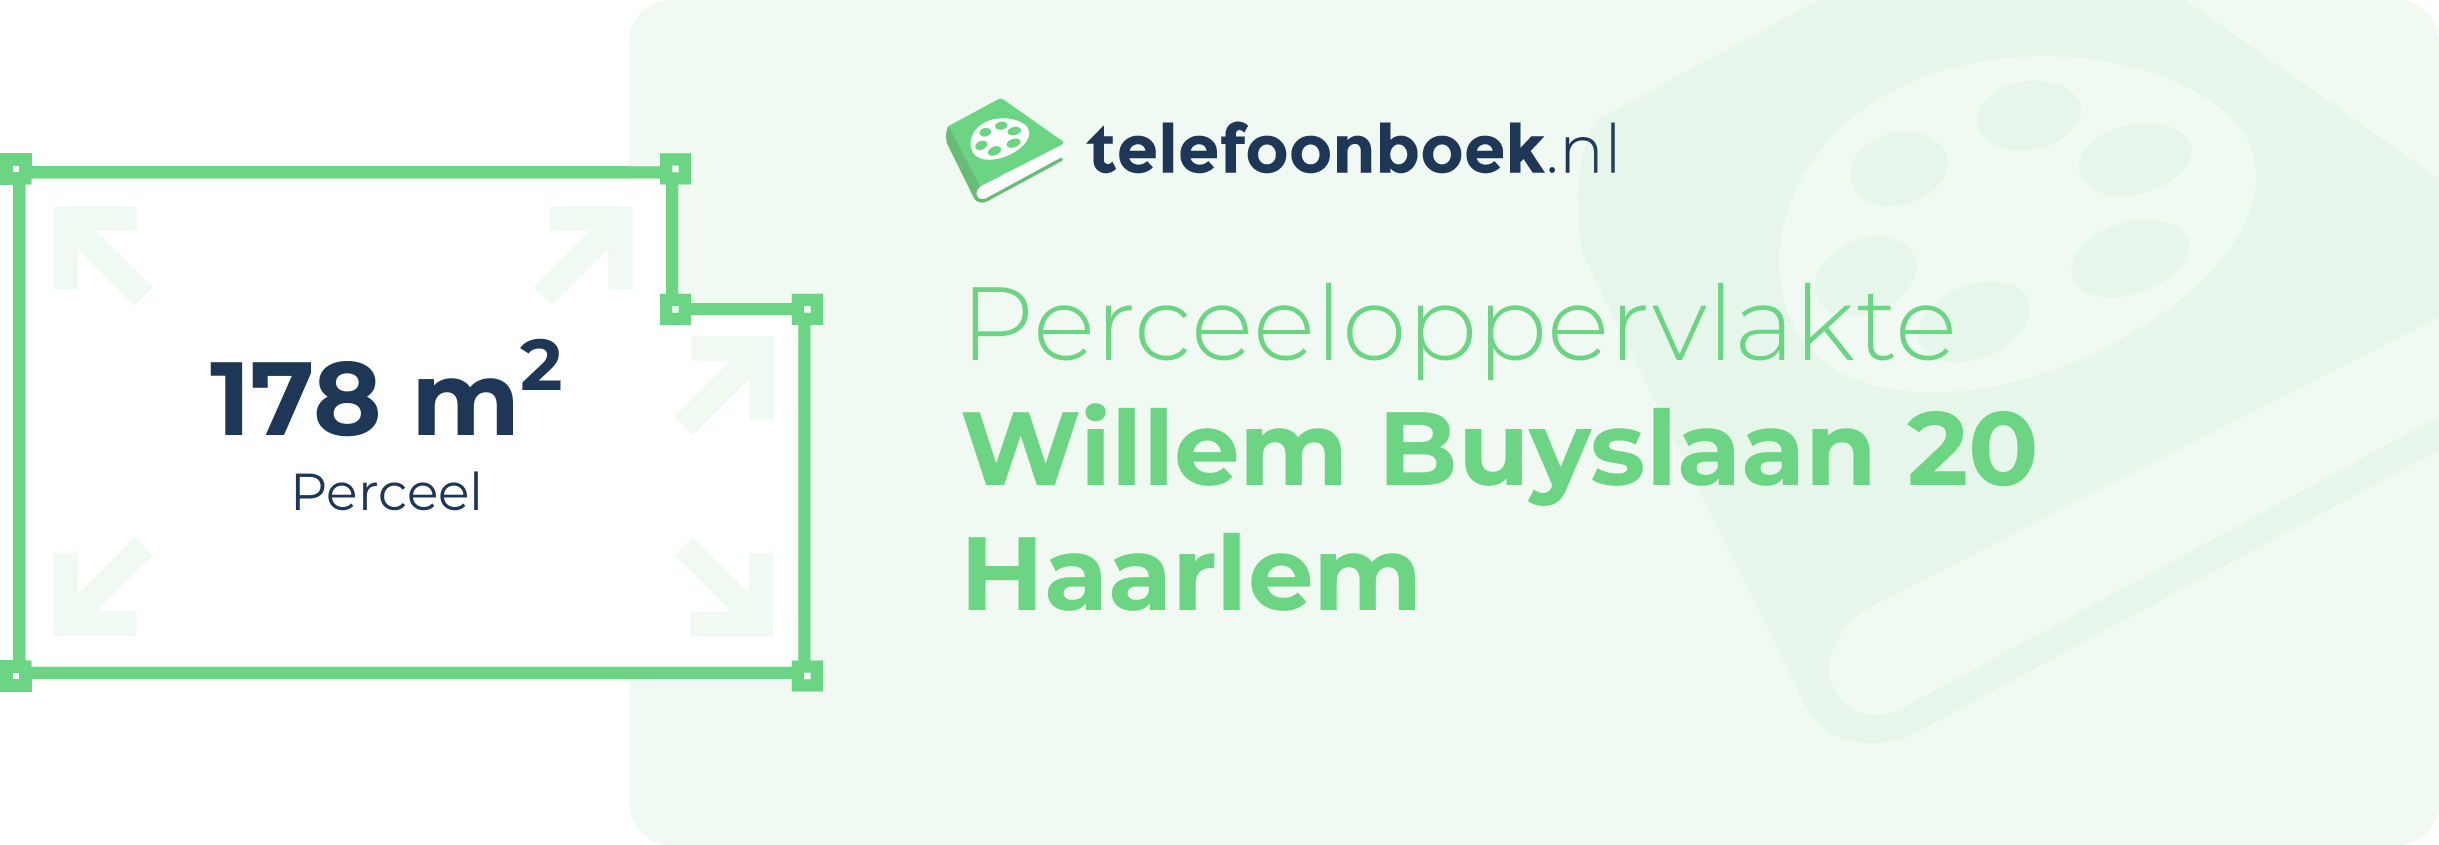 Perceeloppervlakte Willem Buyslaan 20 Haarlem